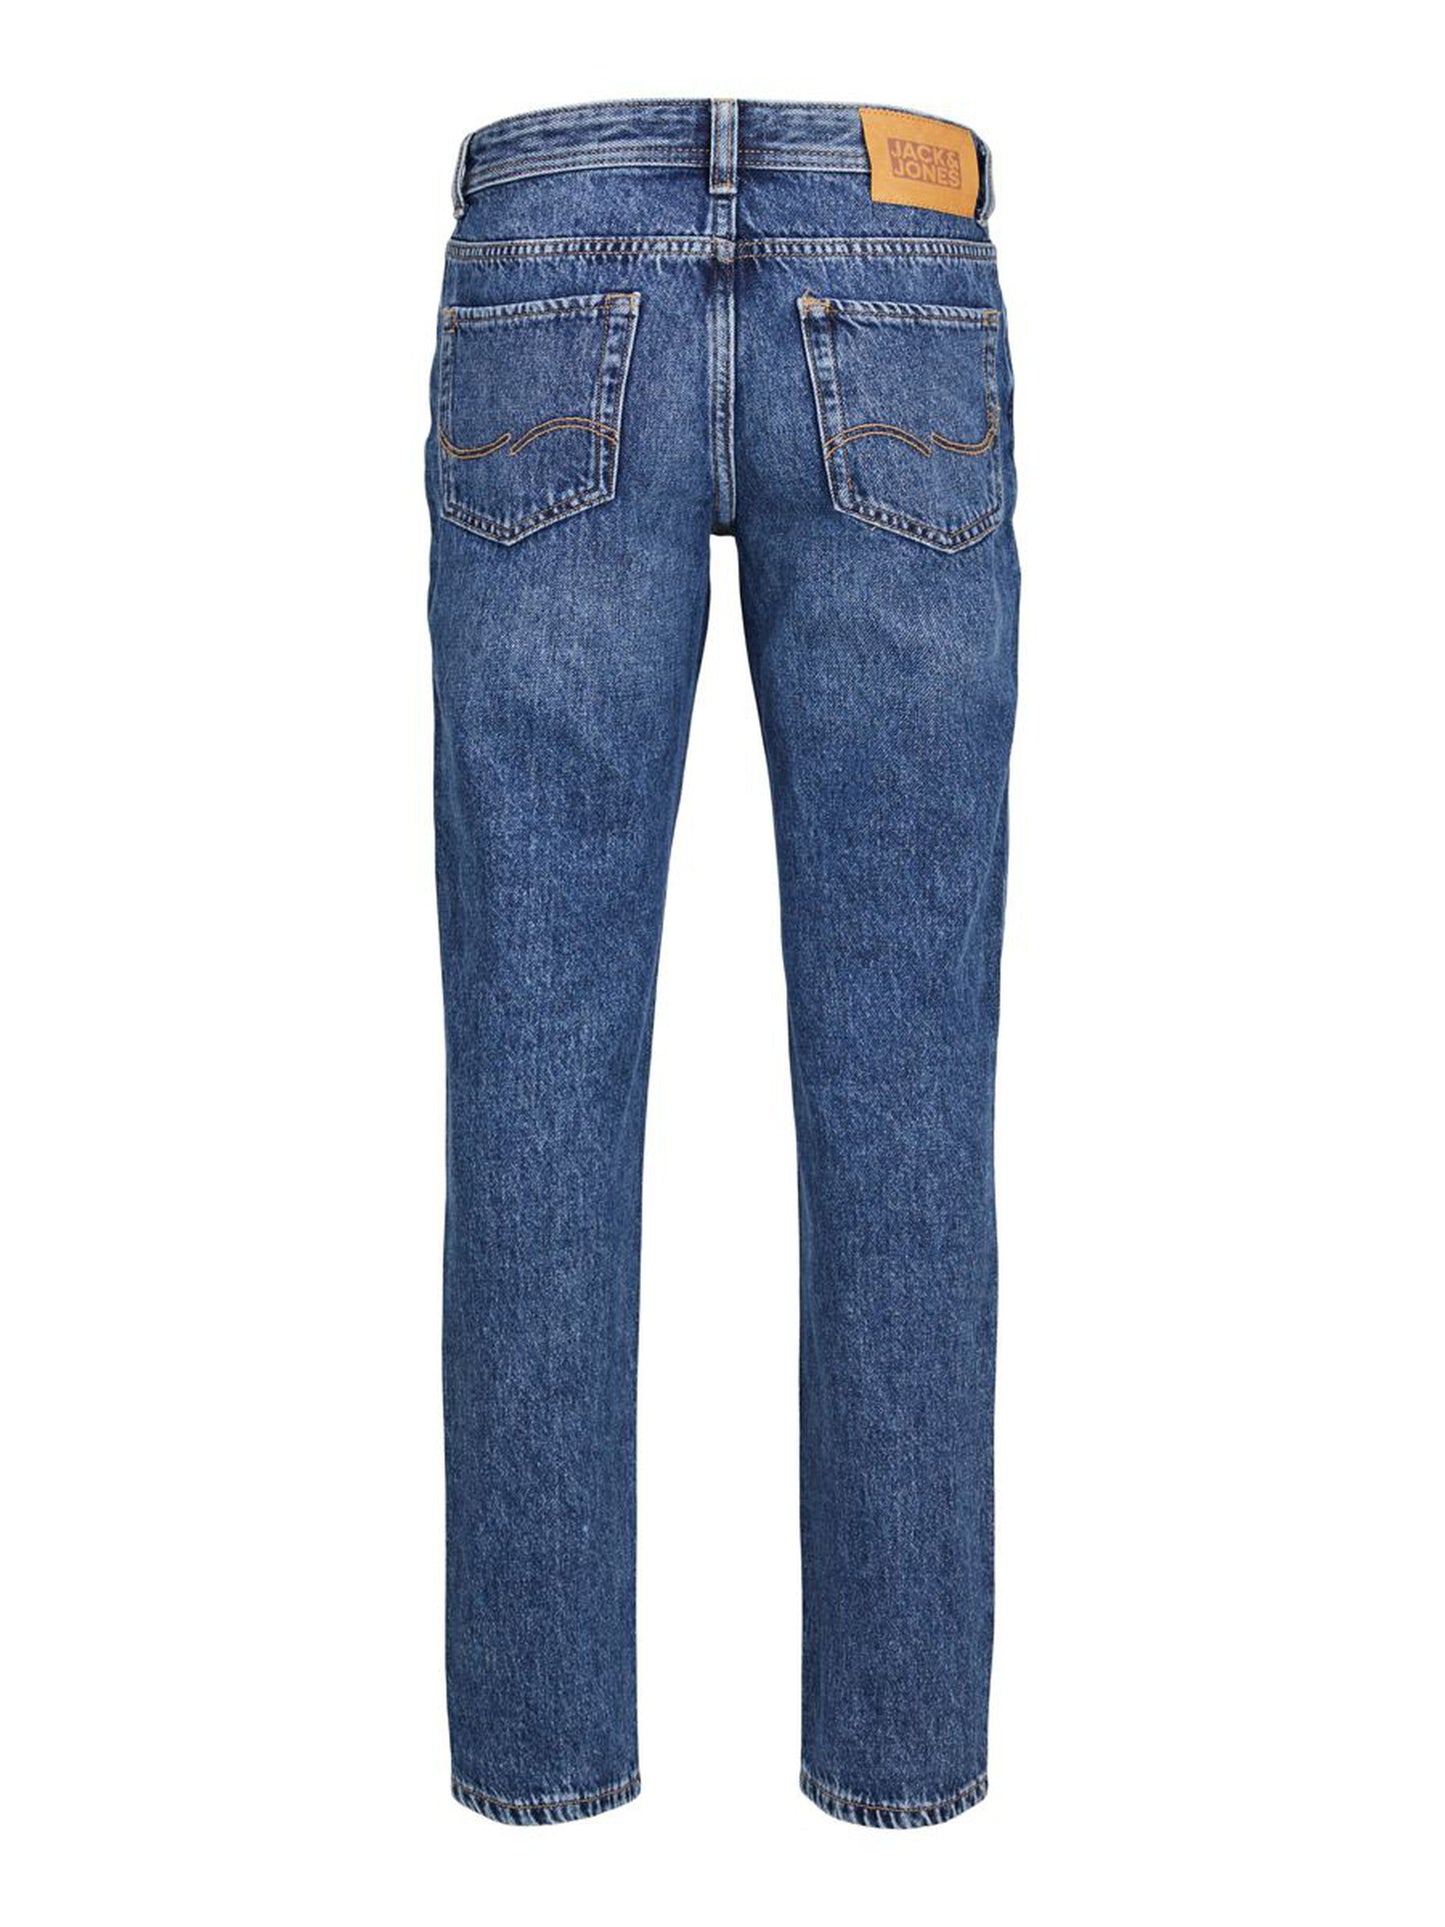 Jack & Jones Boy's Blue Denim Regular Fit Jeans